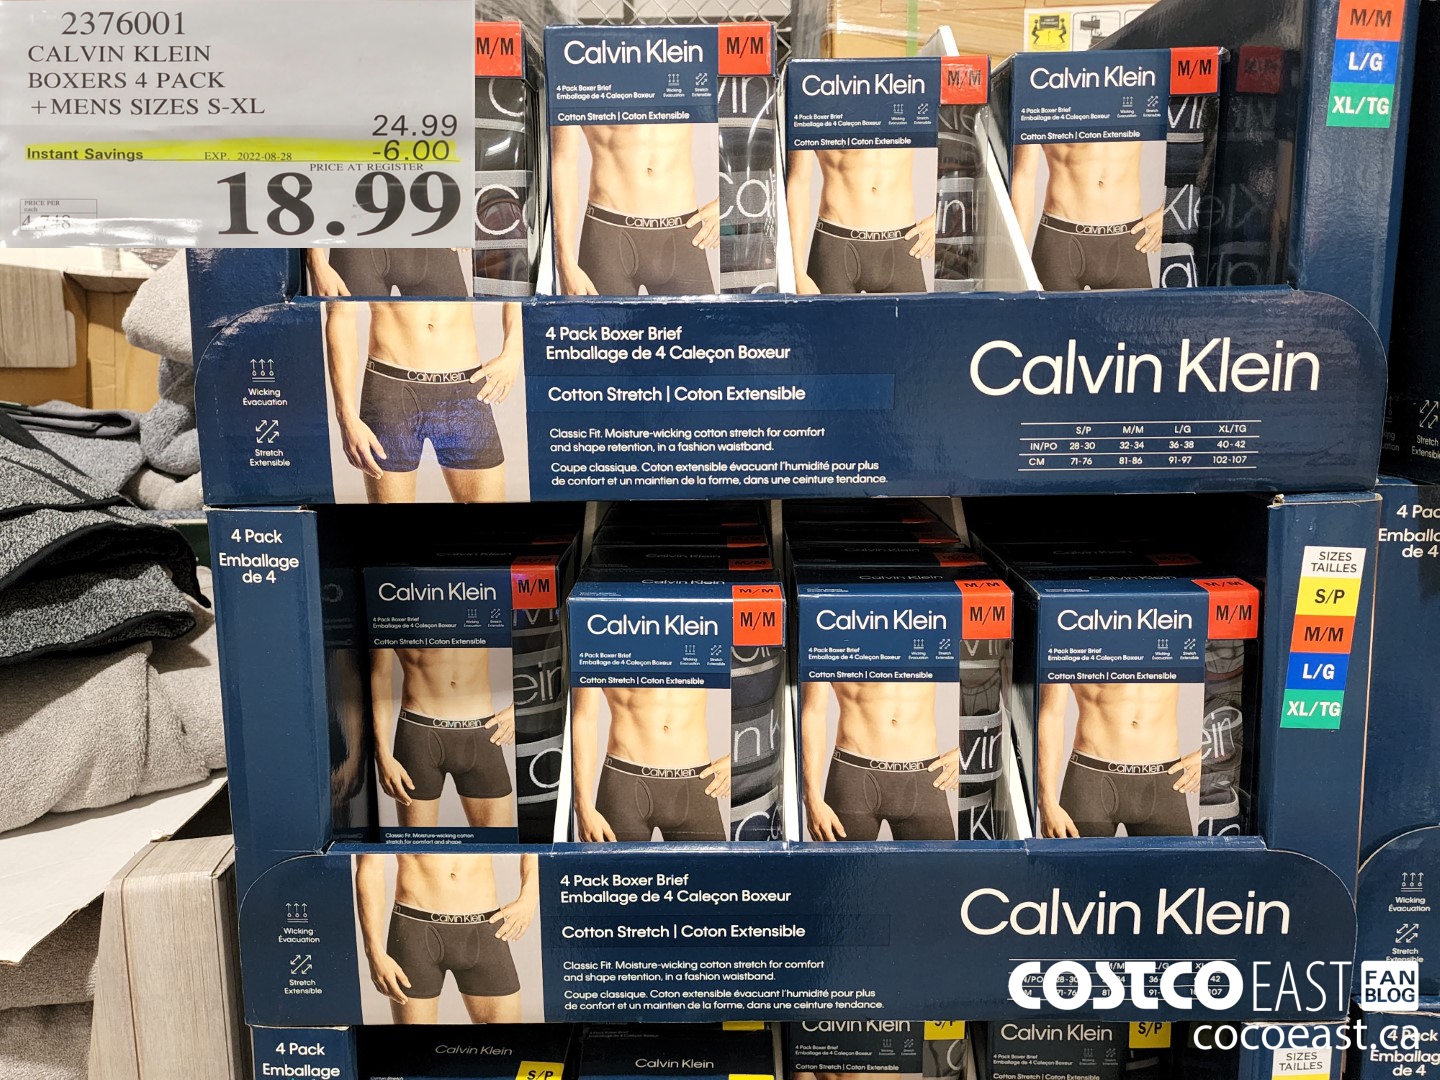 CK underwear 4 pack is on sale!!!#costco #costcosecretdeals